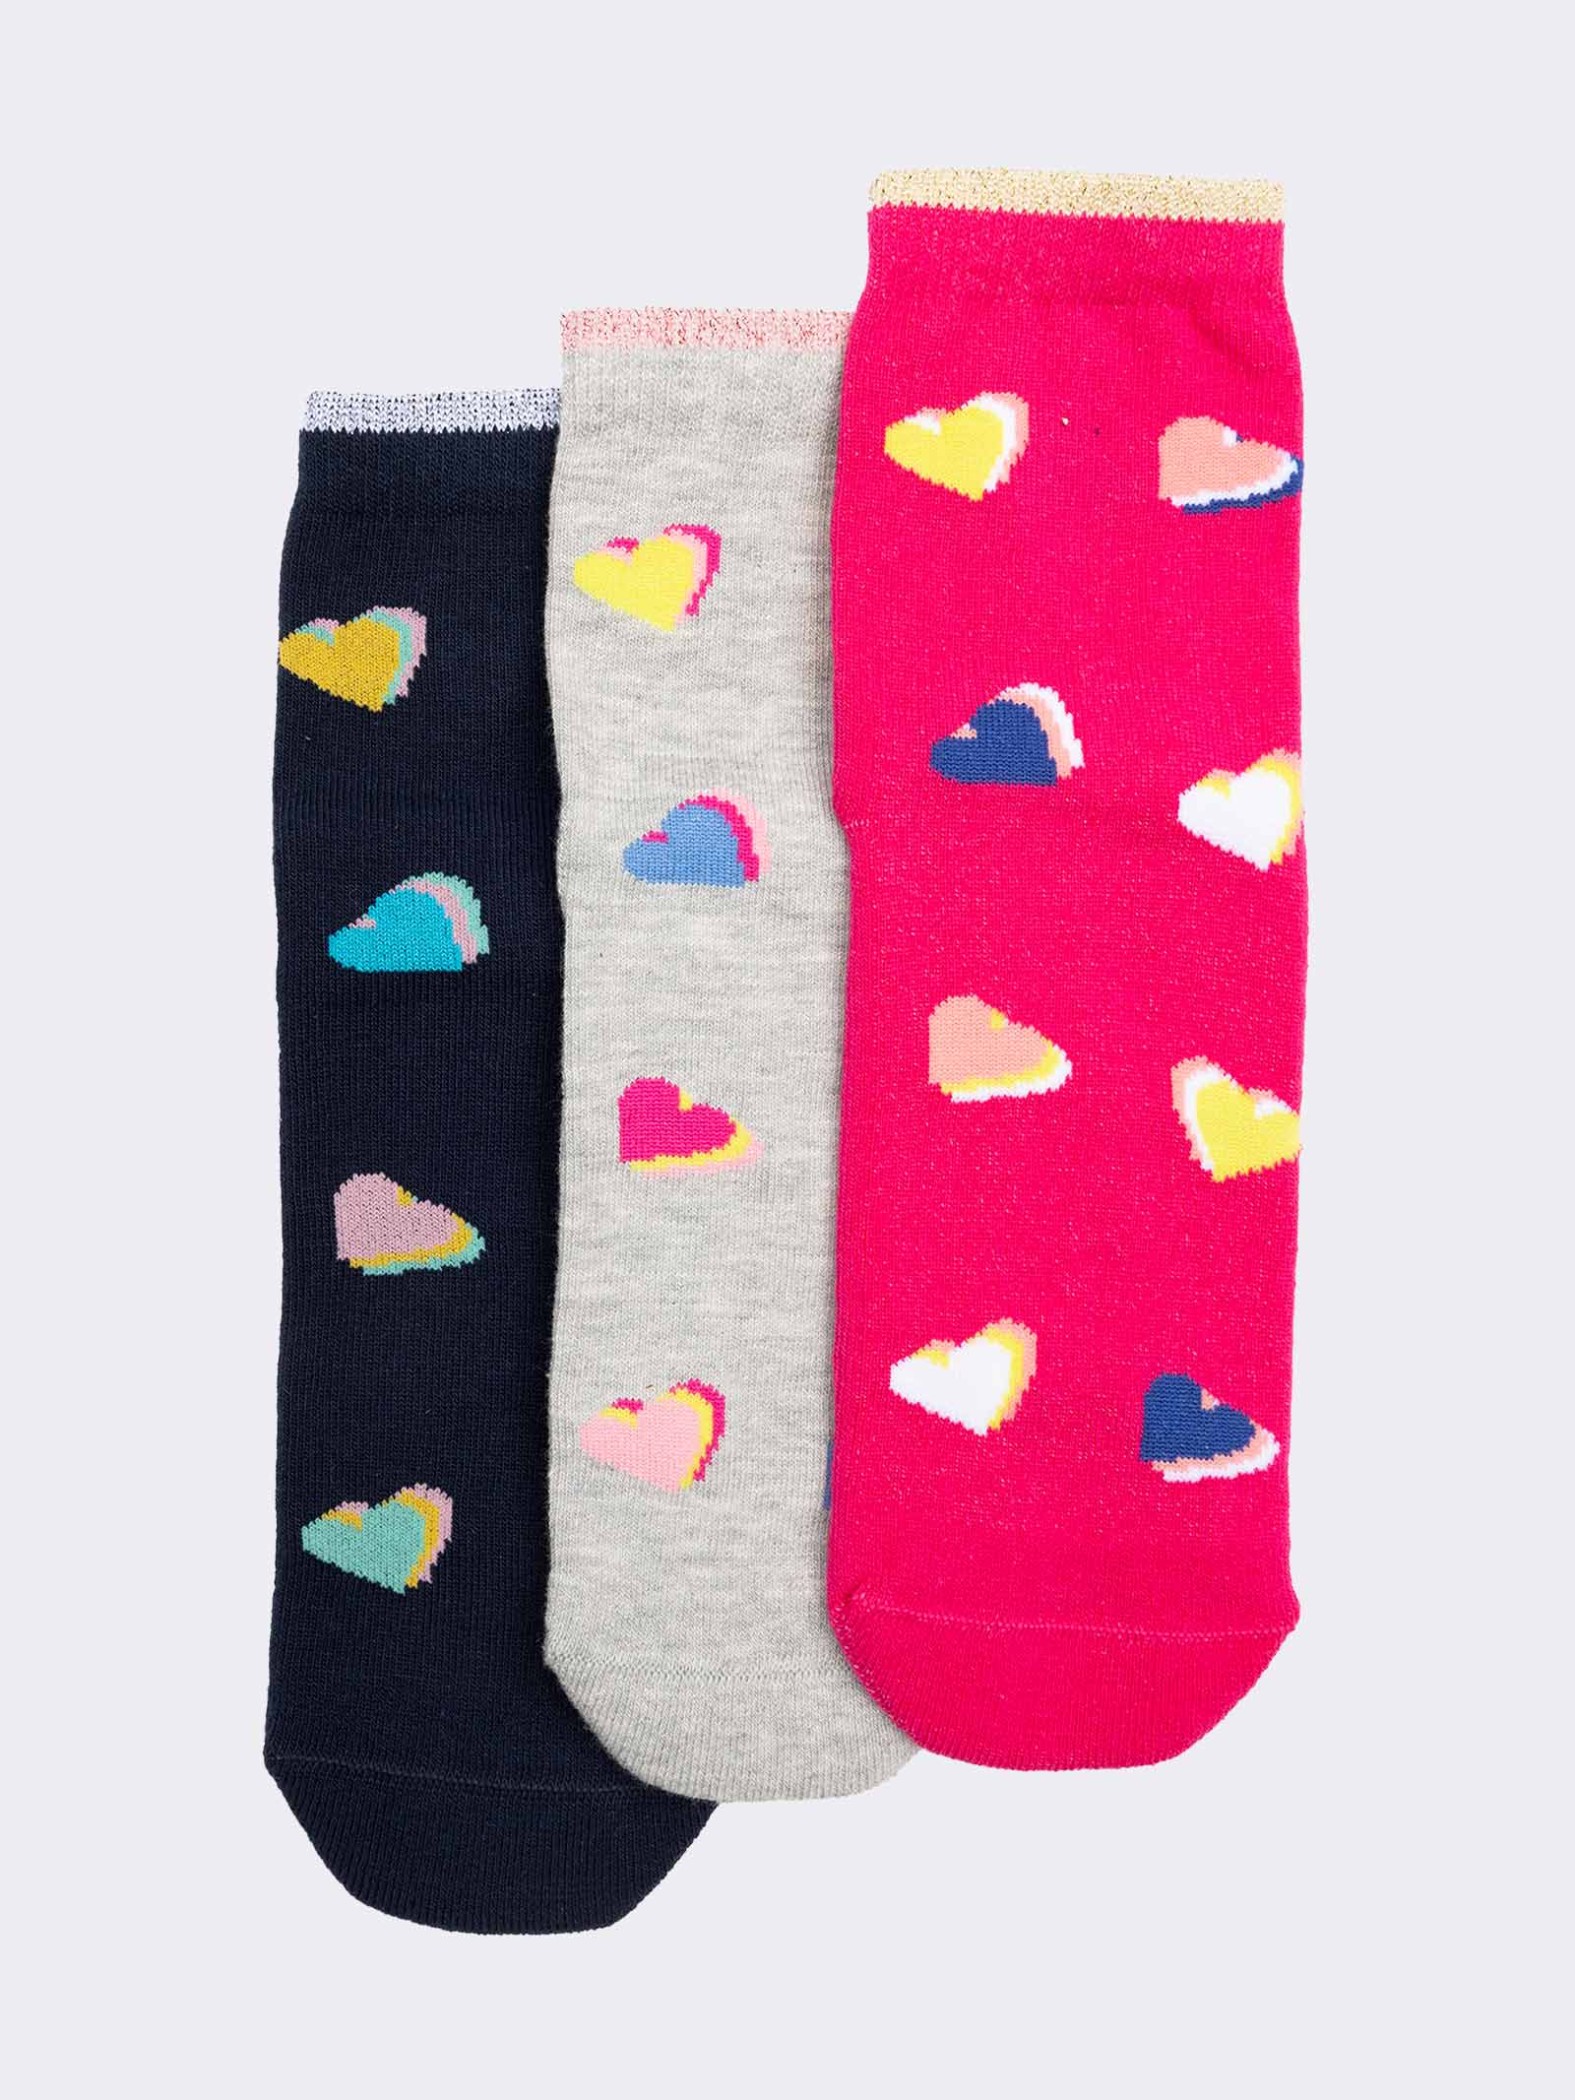 Trio of hearts fantasy socks